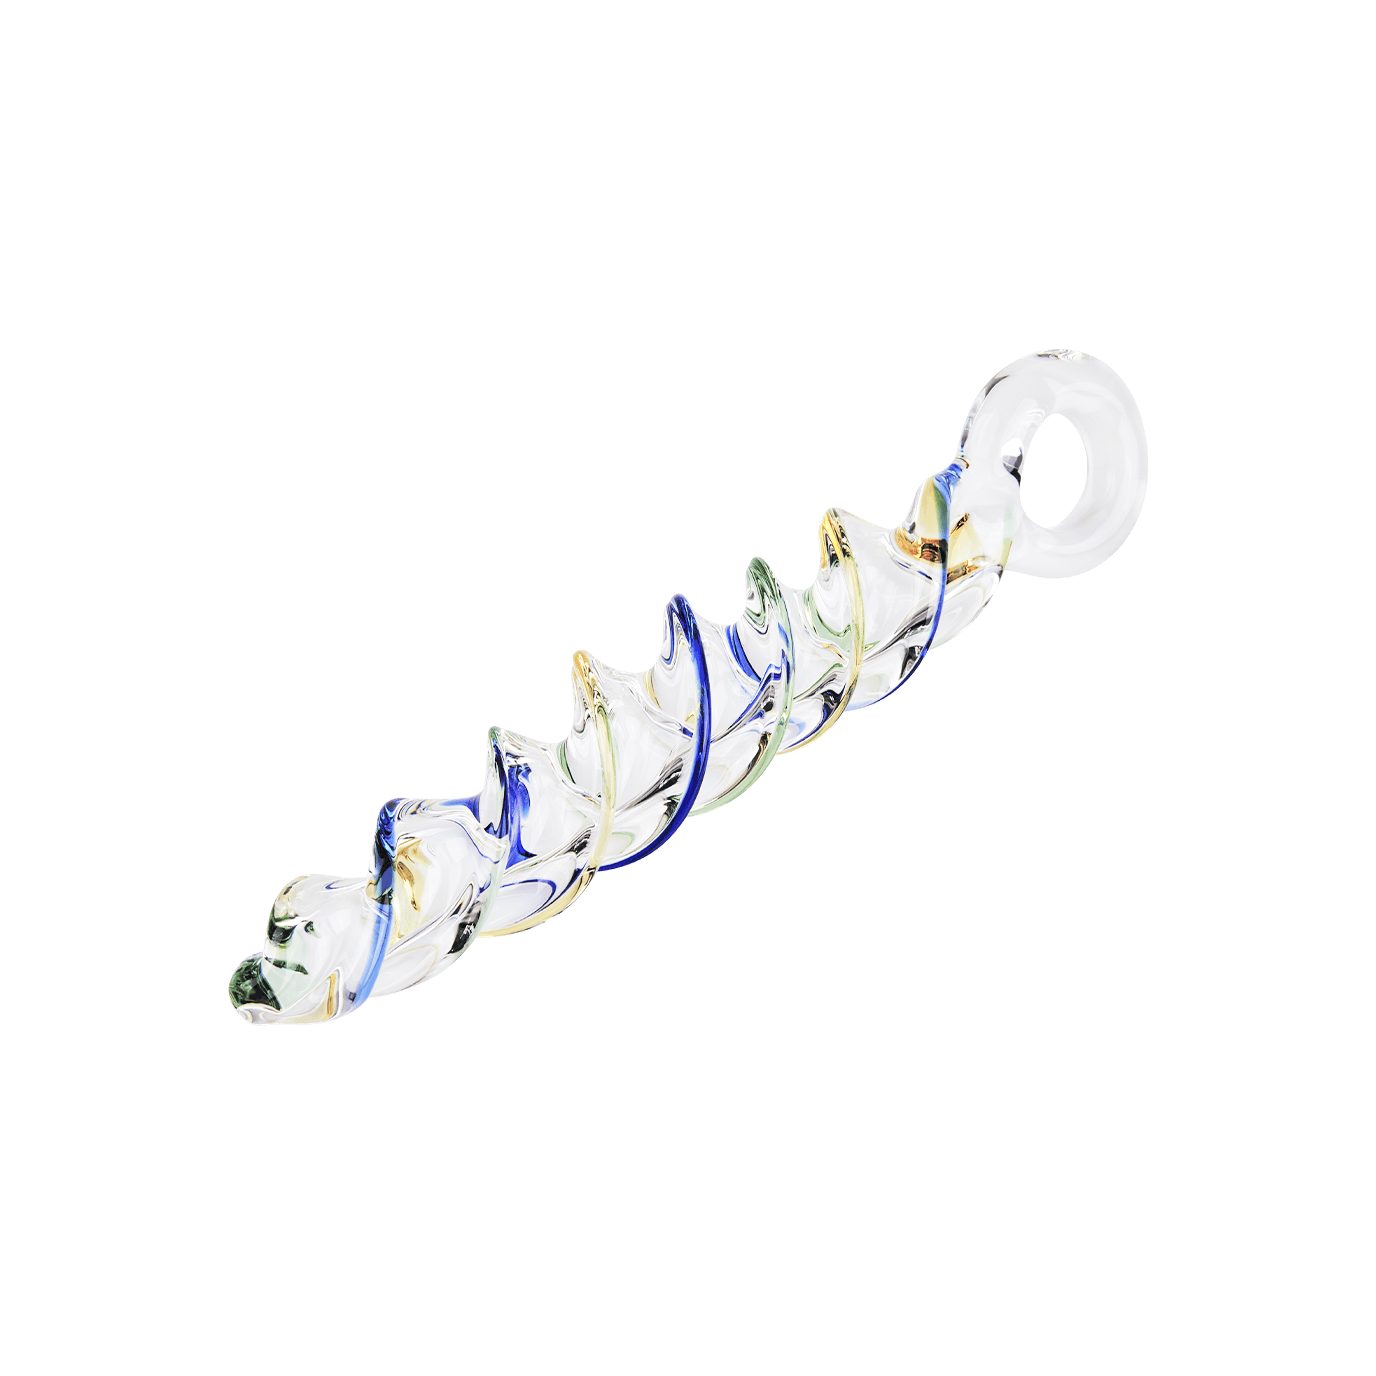 EIS Dildo EIS Broliskatglas, im (18cm) Haltering; Glasdildo Spiral-Design erotische aus Temperaturspiele